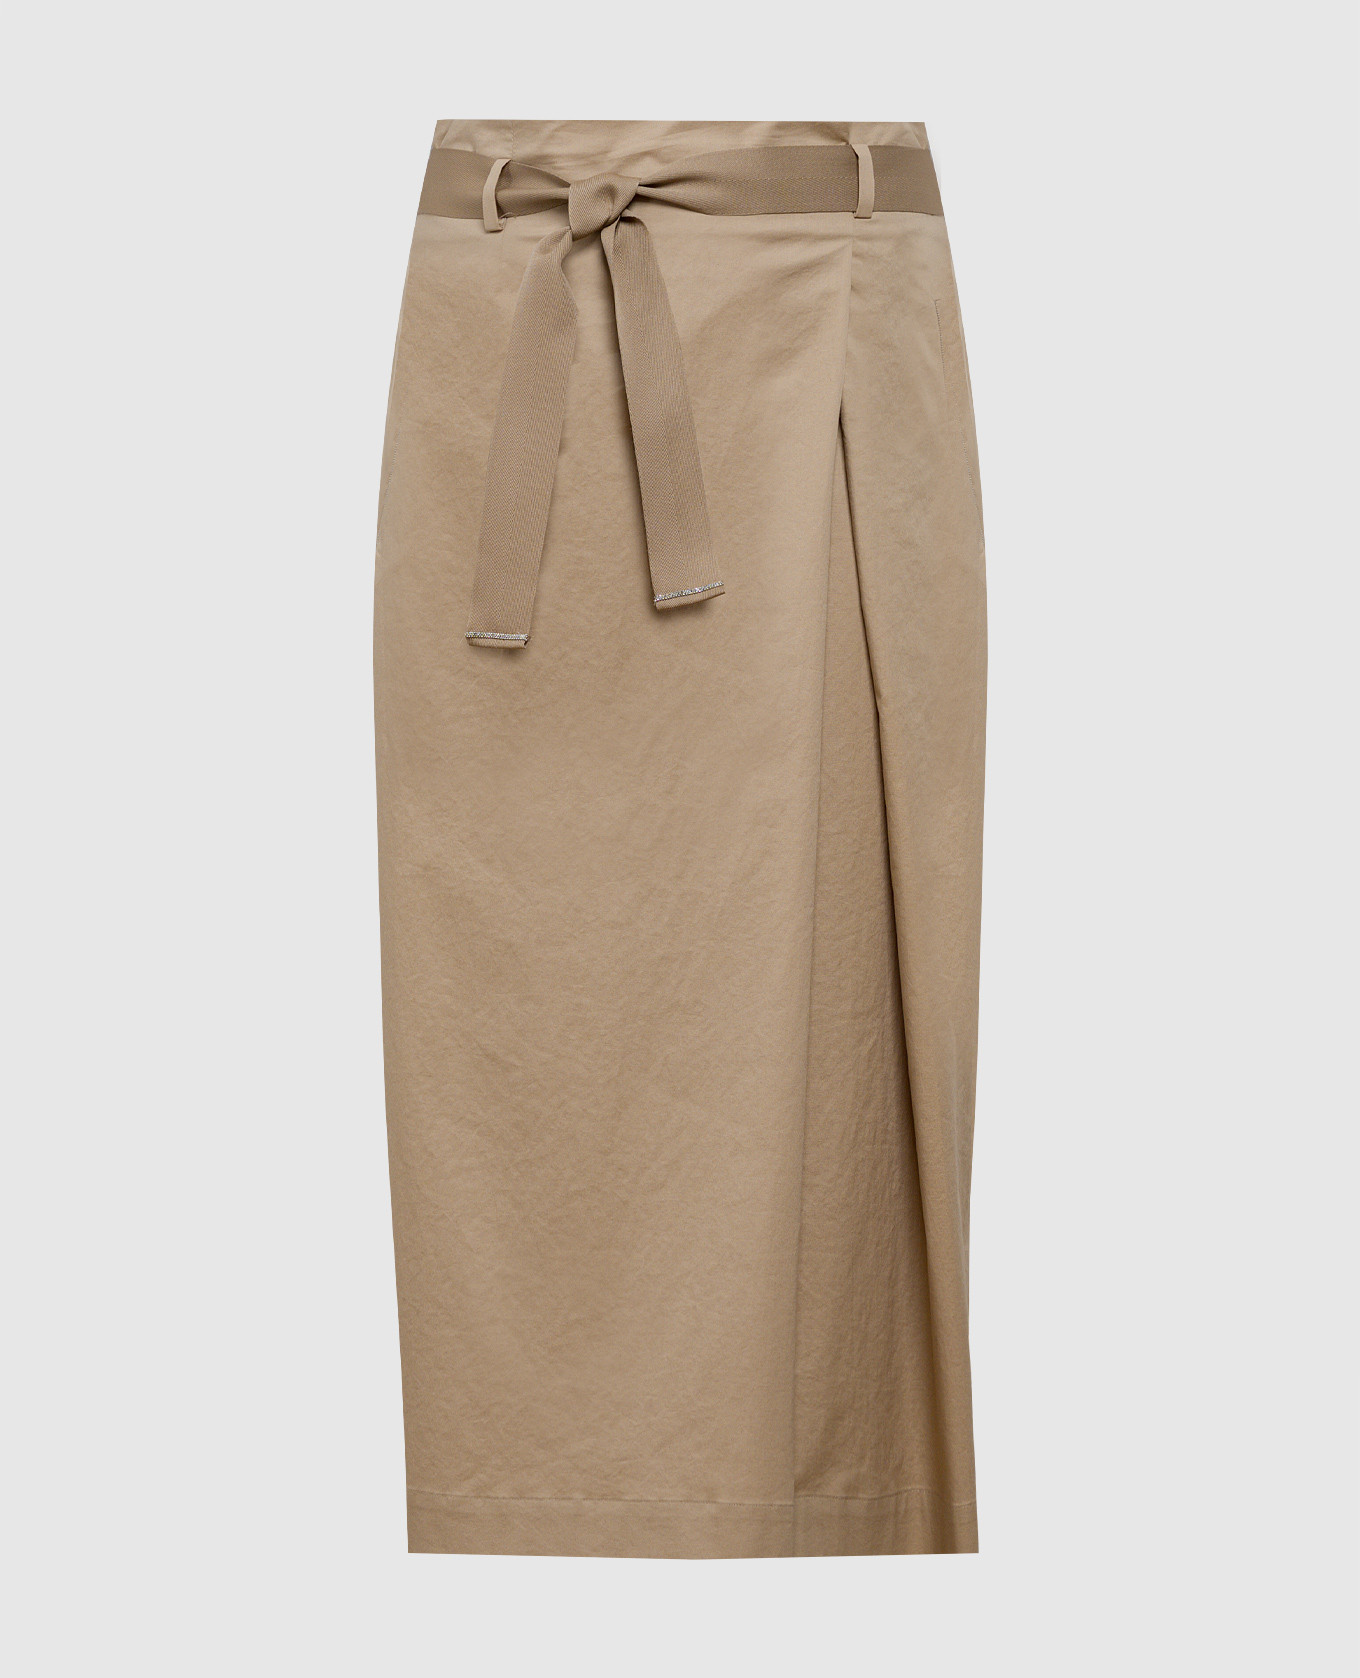 Brown midi skirt with monil chain